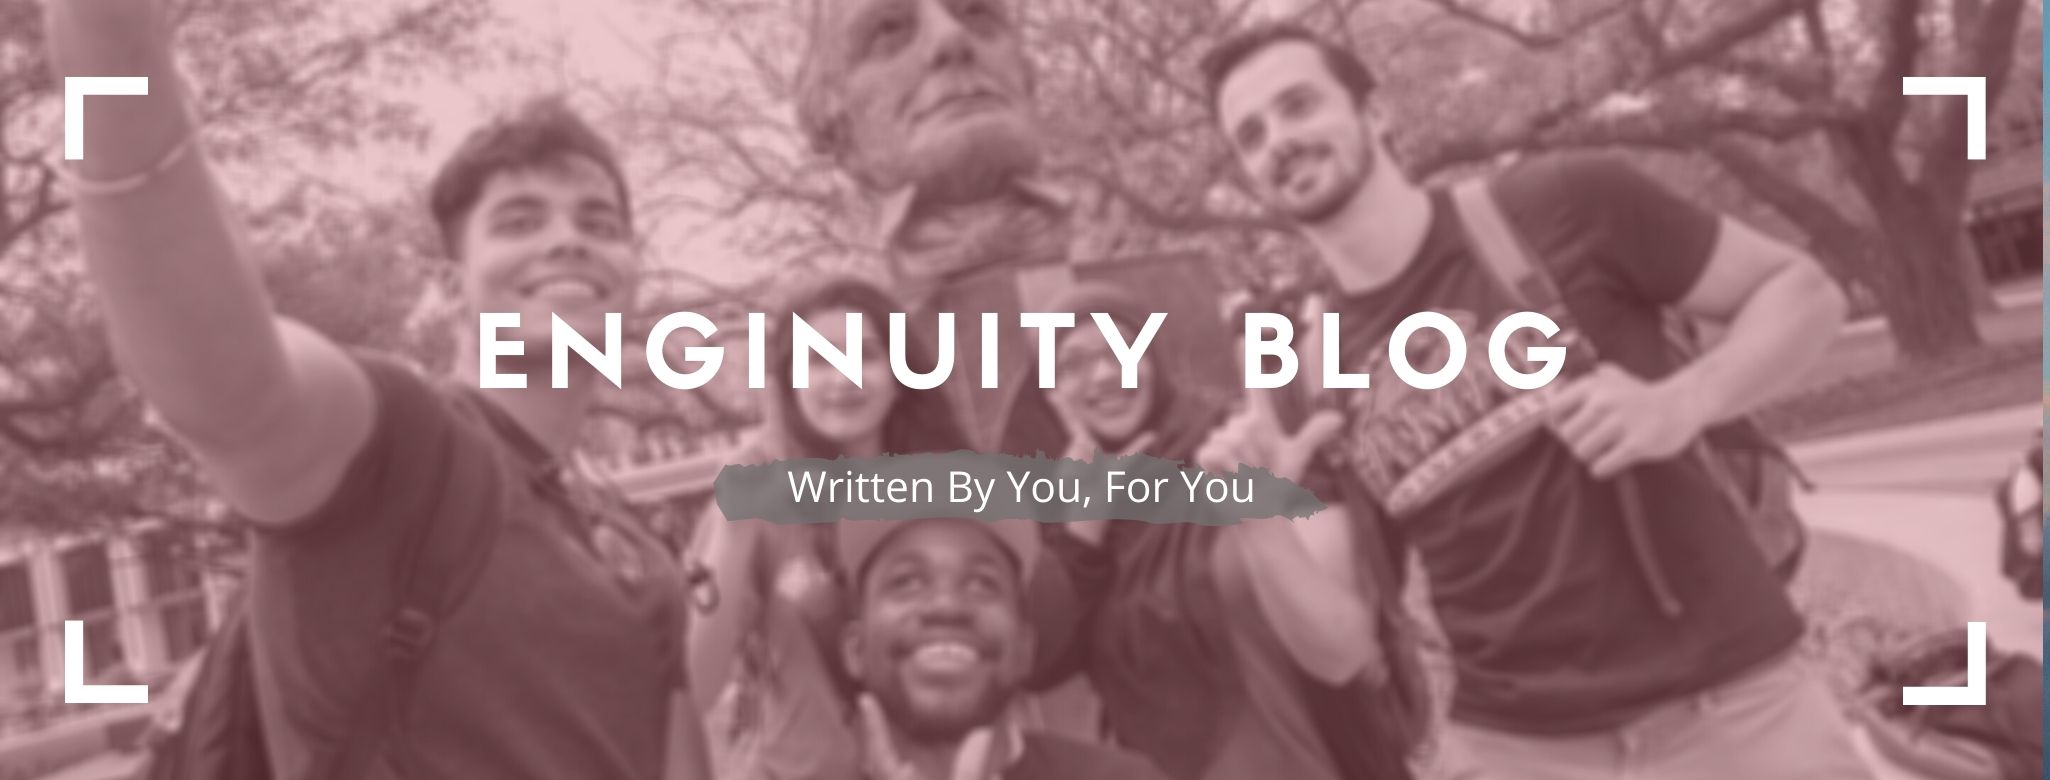 Enginuity Blog Header